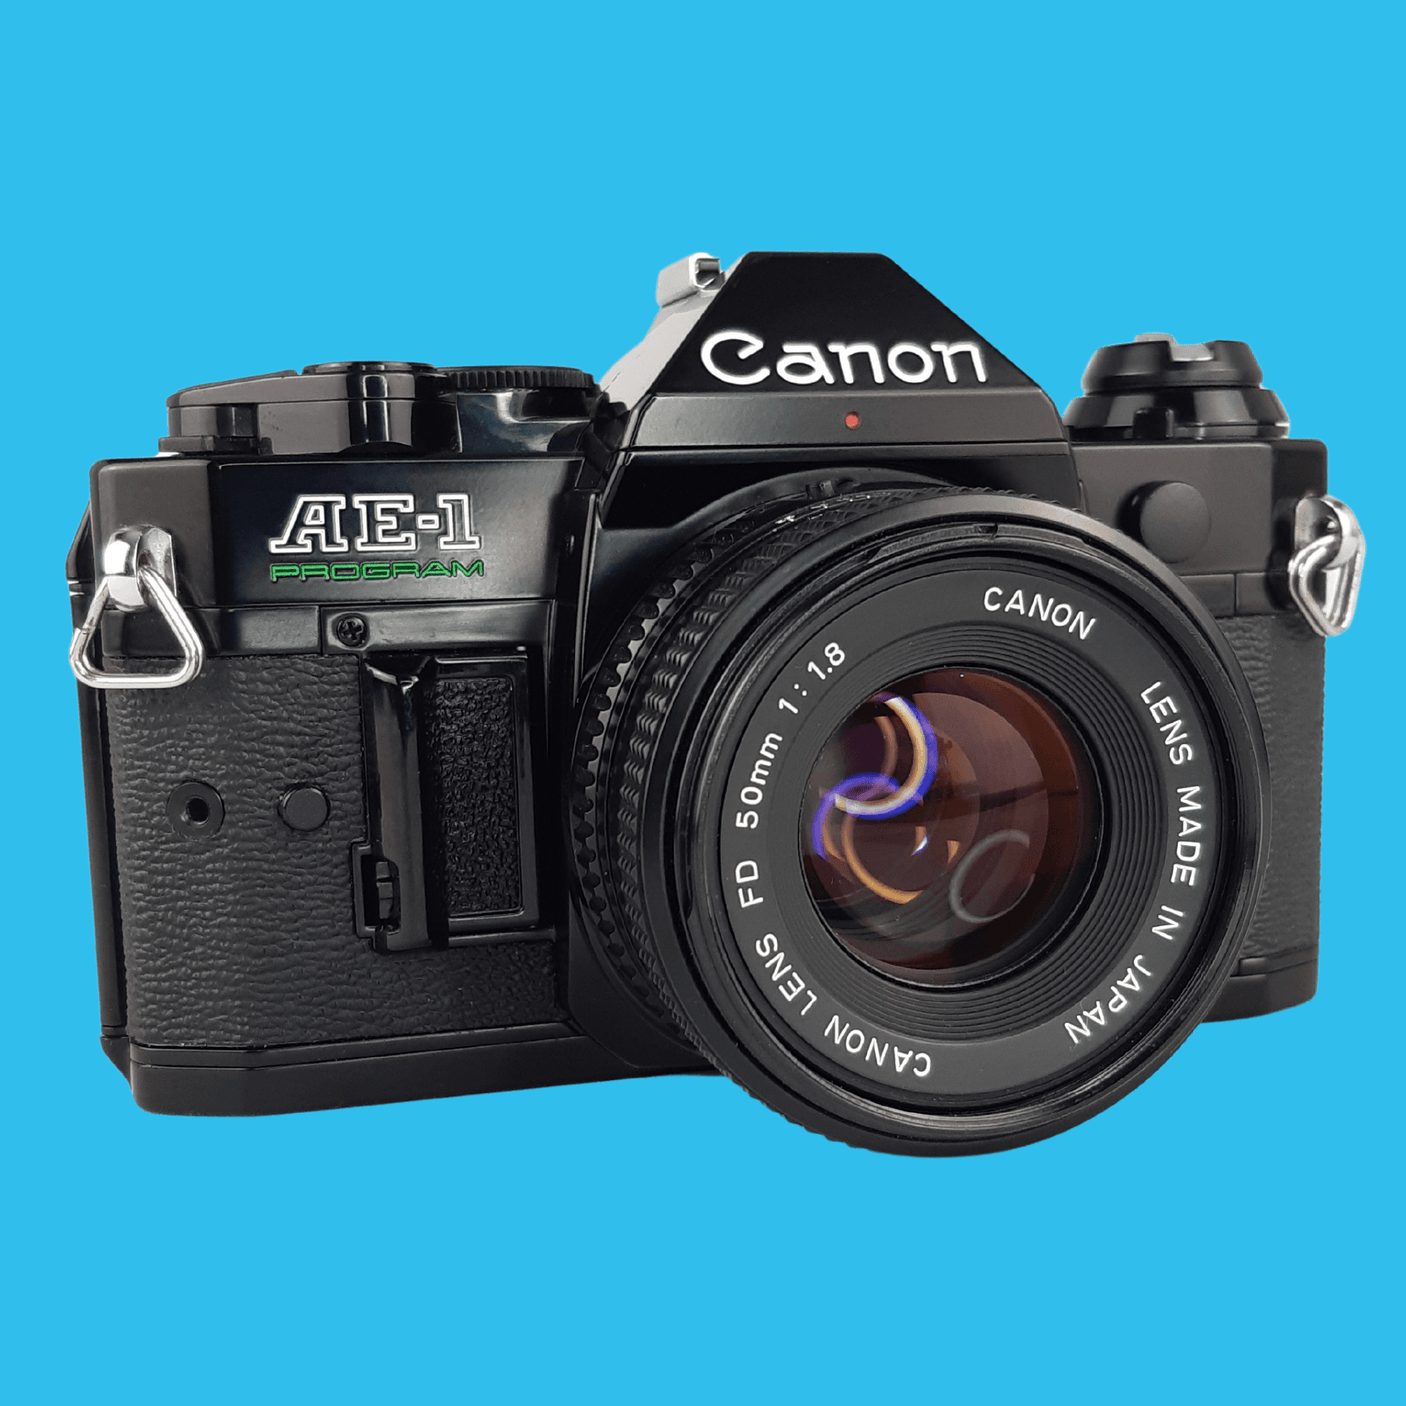 Canon AE-1 PROGRAM 一眼レフカメラミラーレス一眼